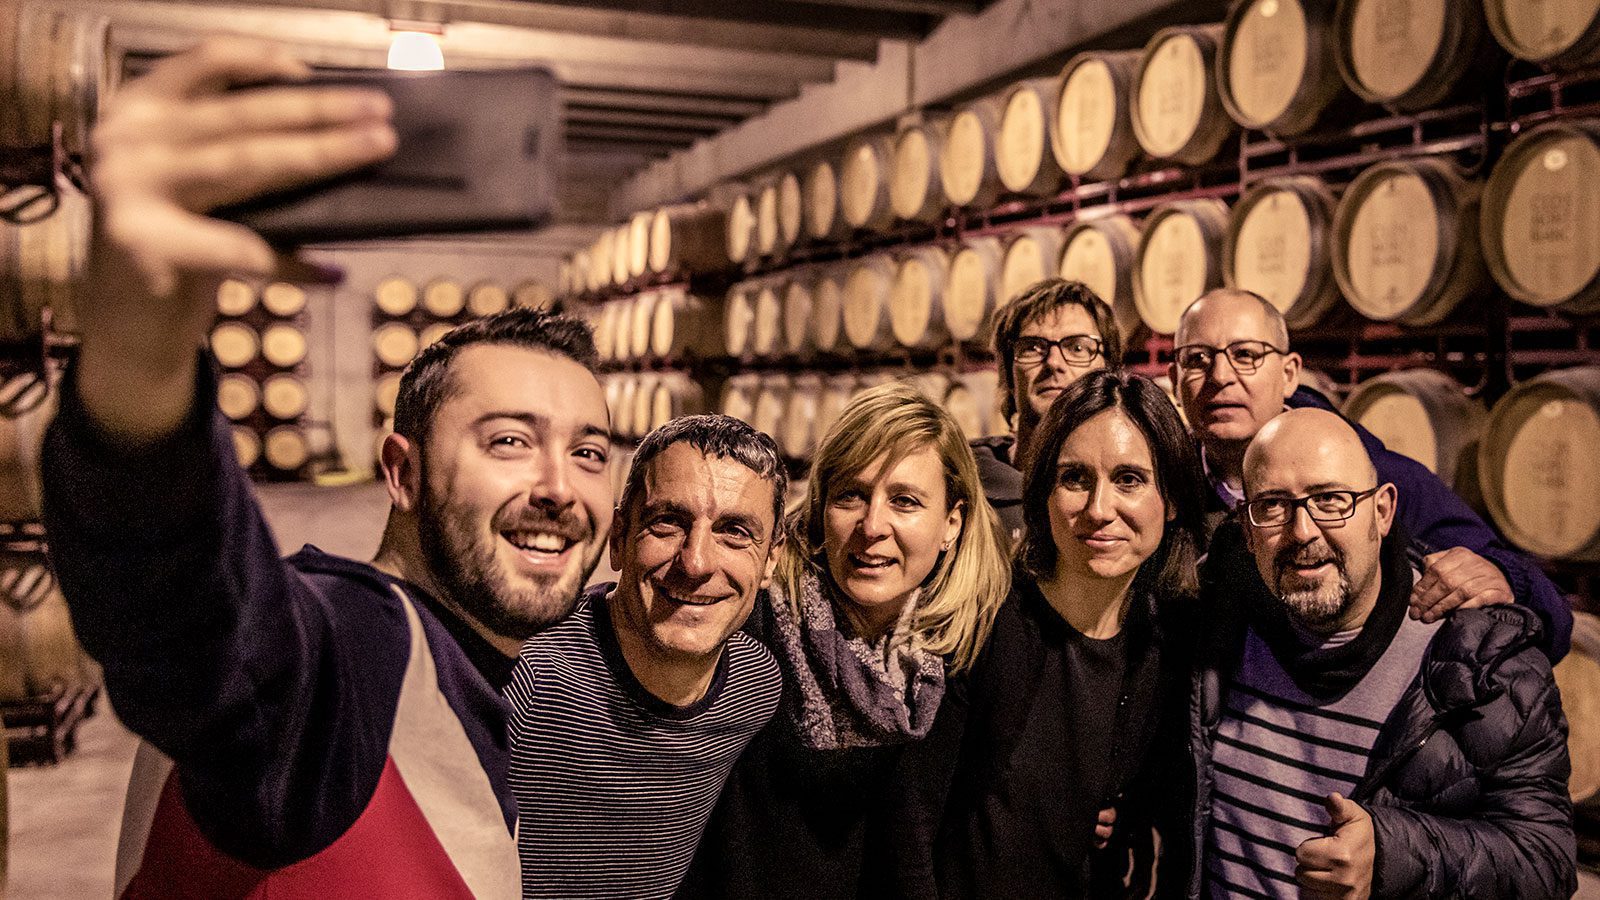 Visita bodega ClosMontblanc con cata de vinos -Enoturismo Cataluña